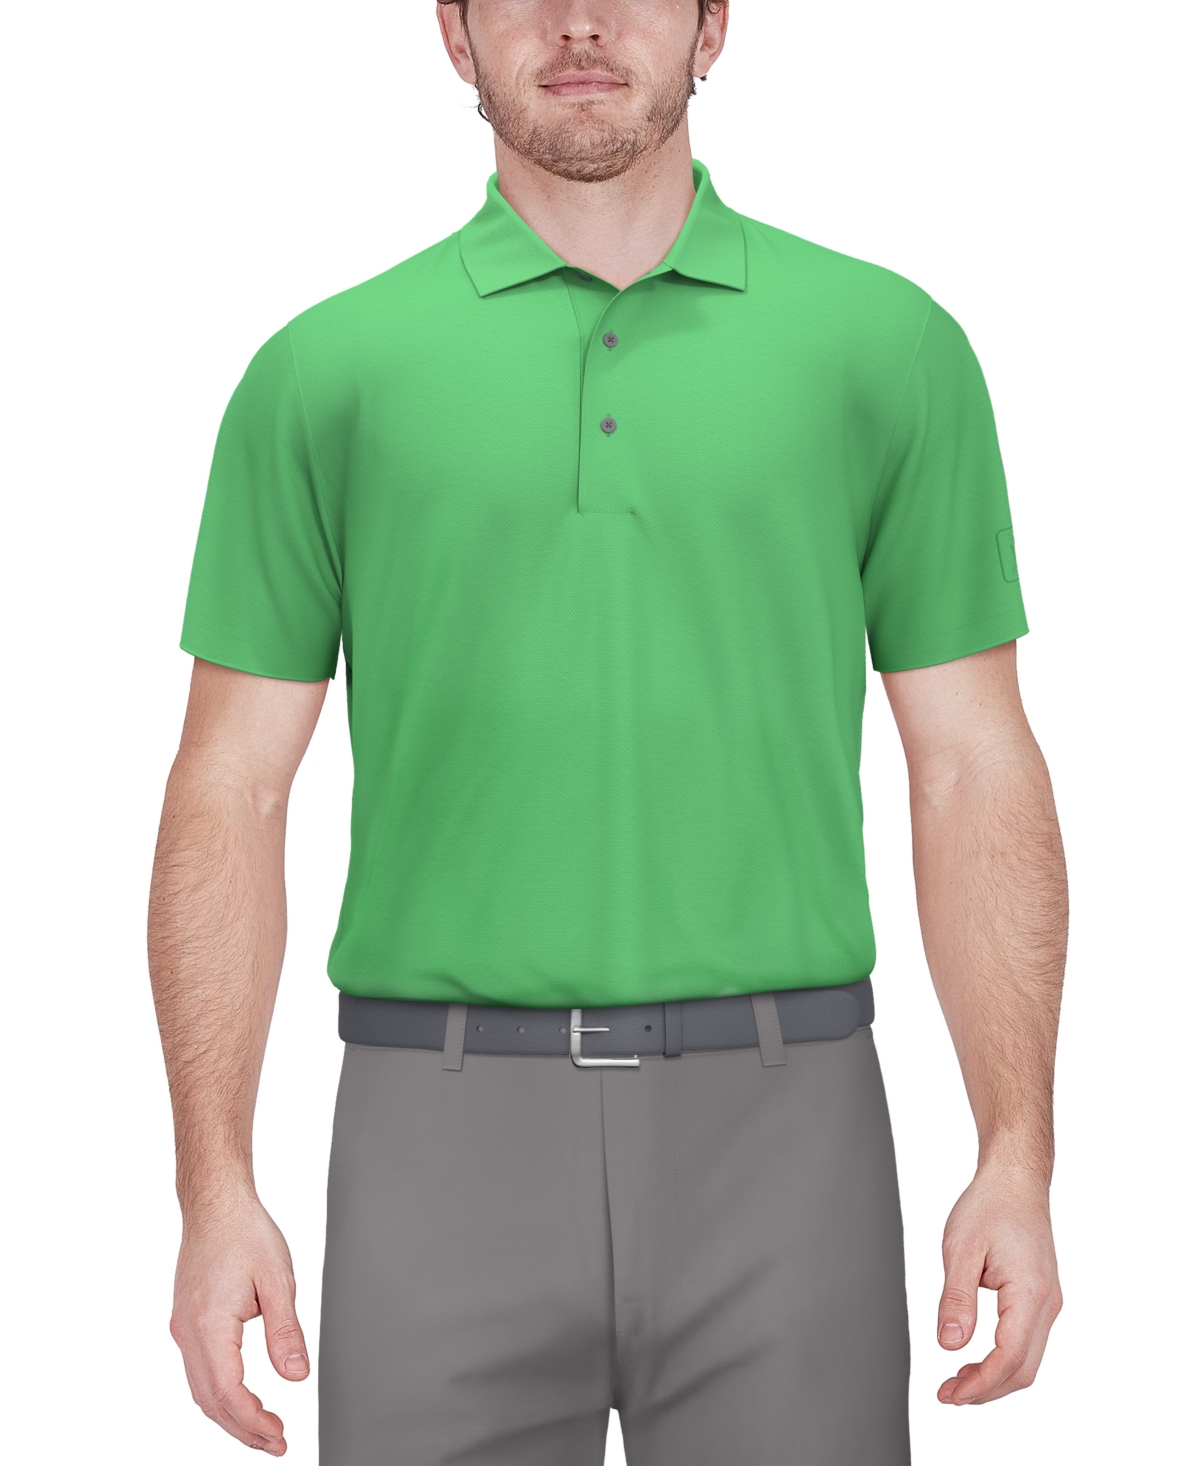 Men's Airflux Mesh Golf Polo Shirt - Shell Pink